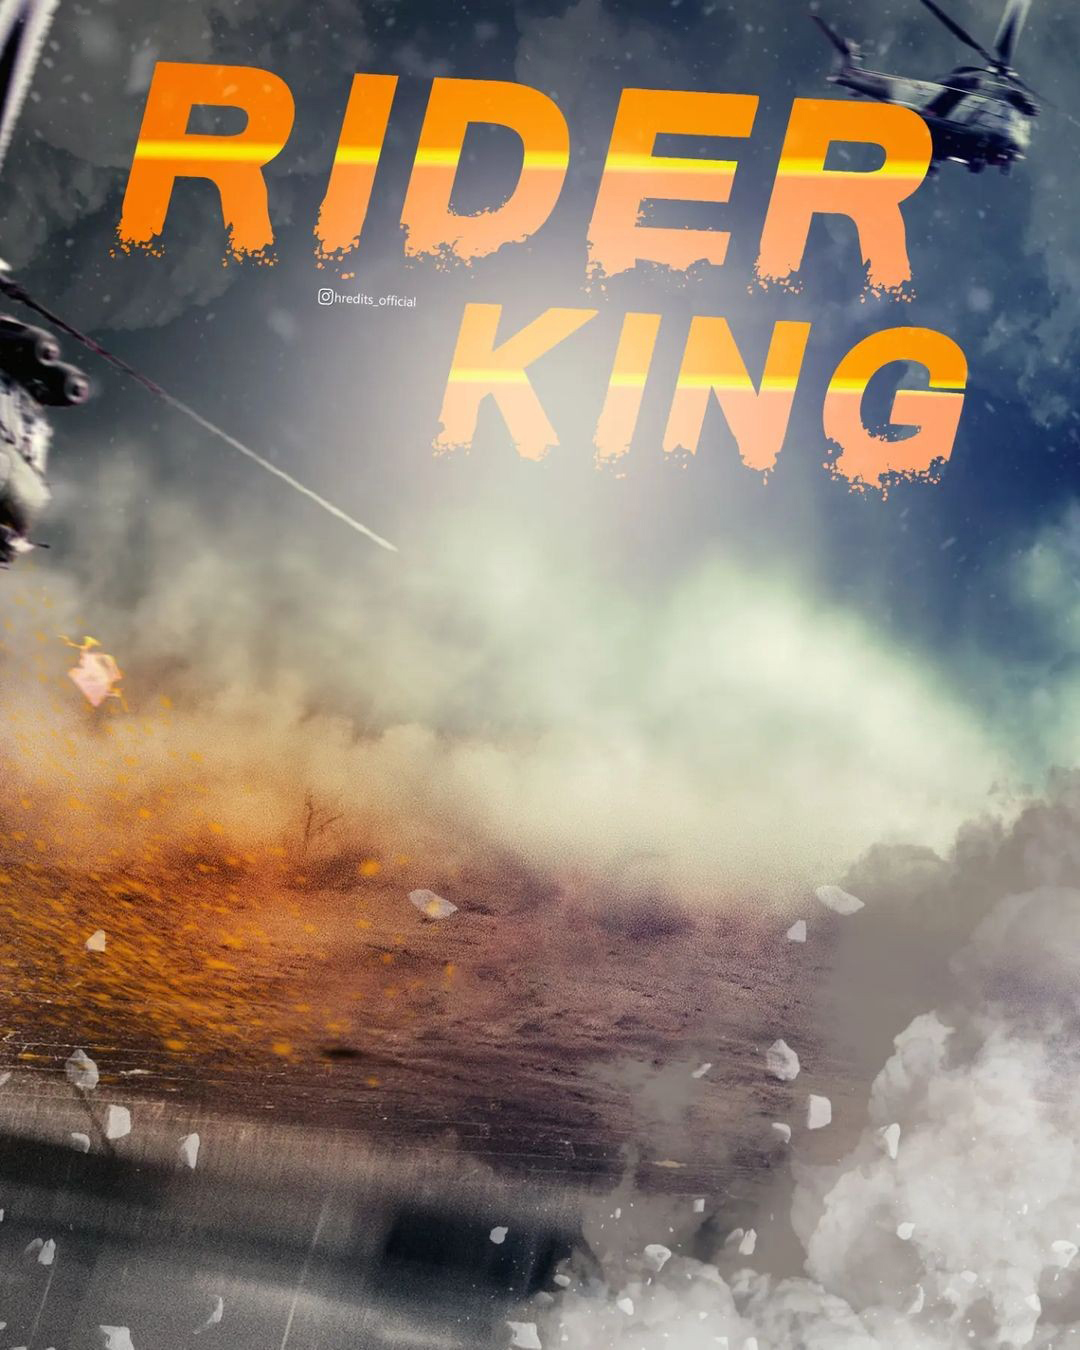  Rider King CB Editing Background HD Download Free | CBEditz